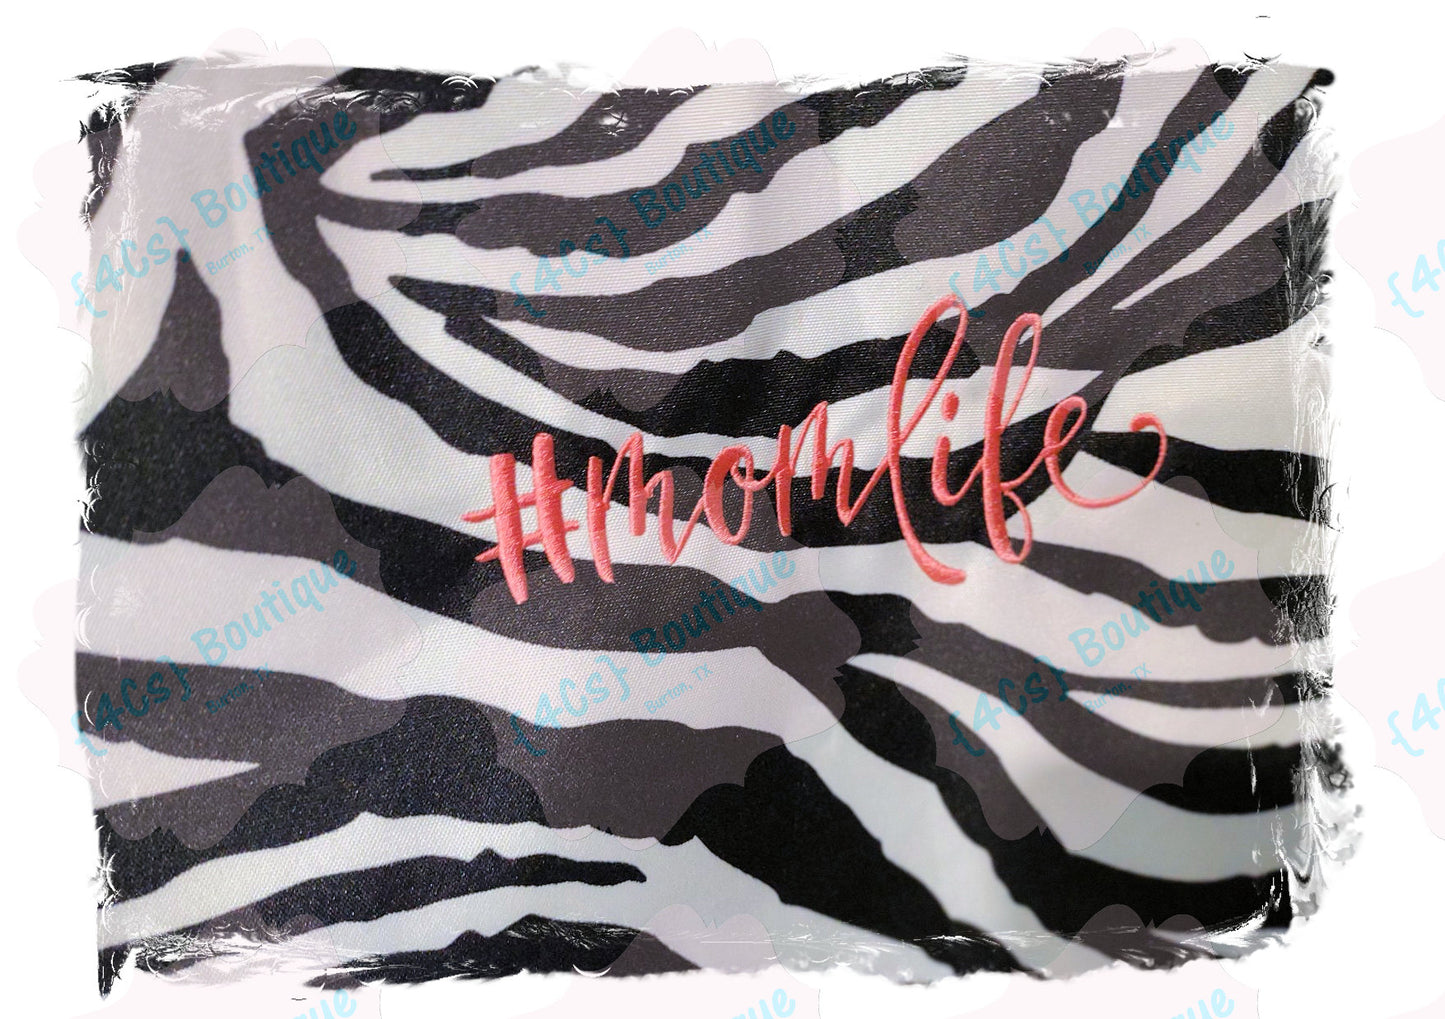 #momlife Embroidered Hot Pink/Zebra Tote Bag